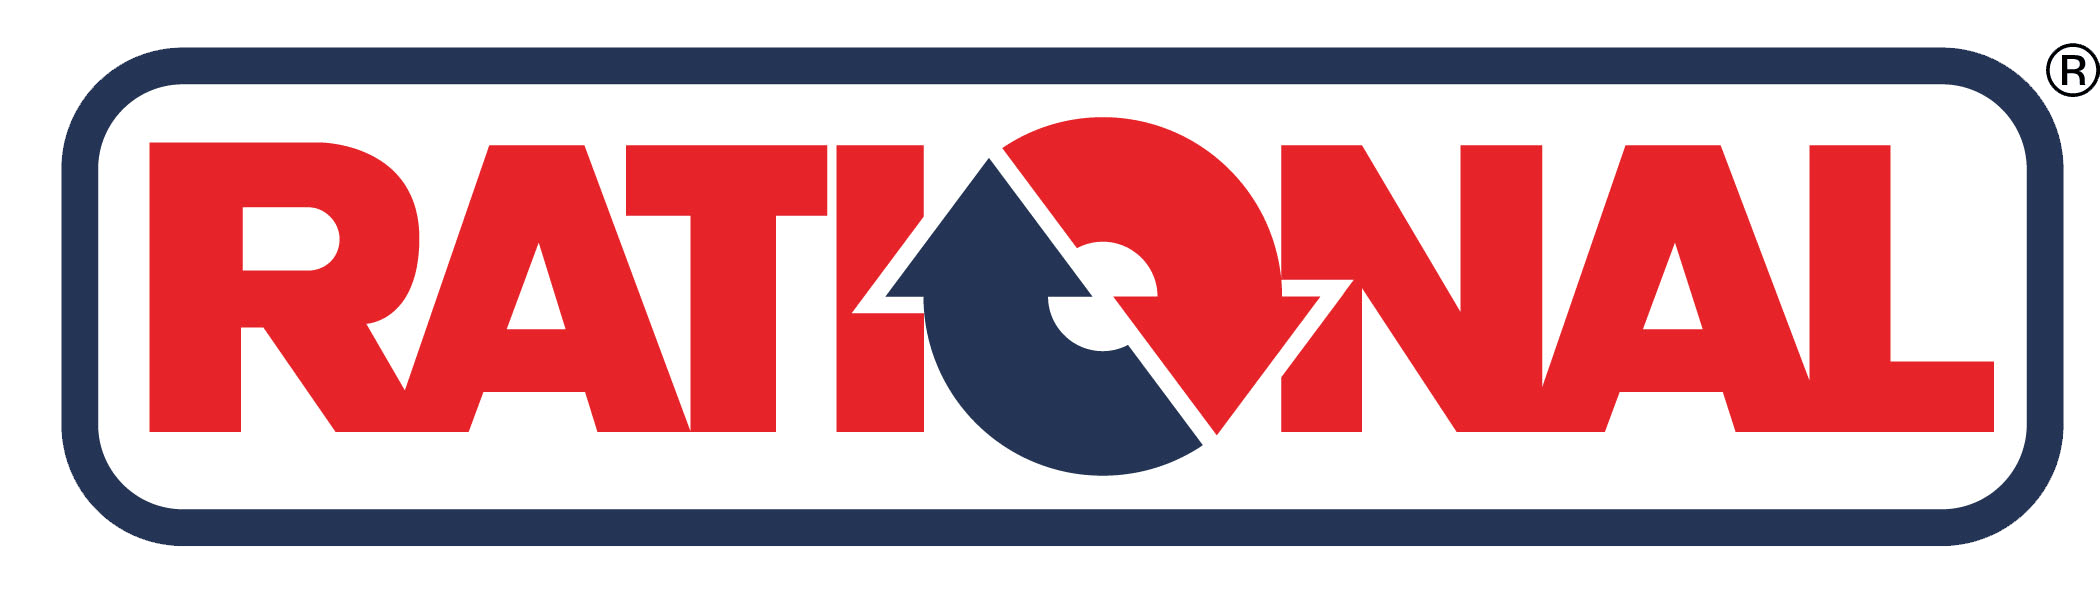 rational-logo.png